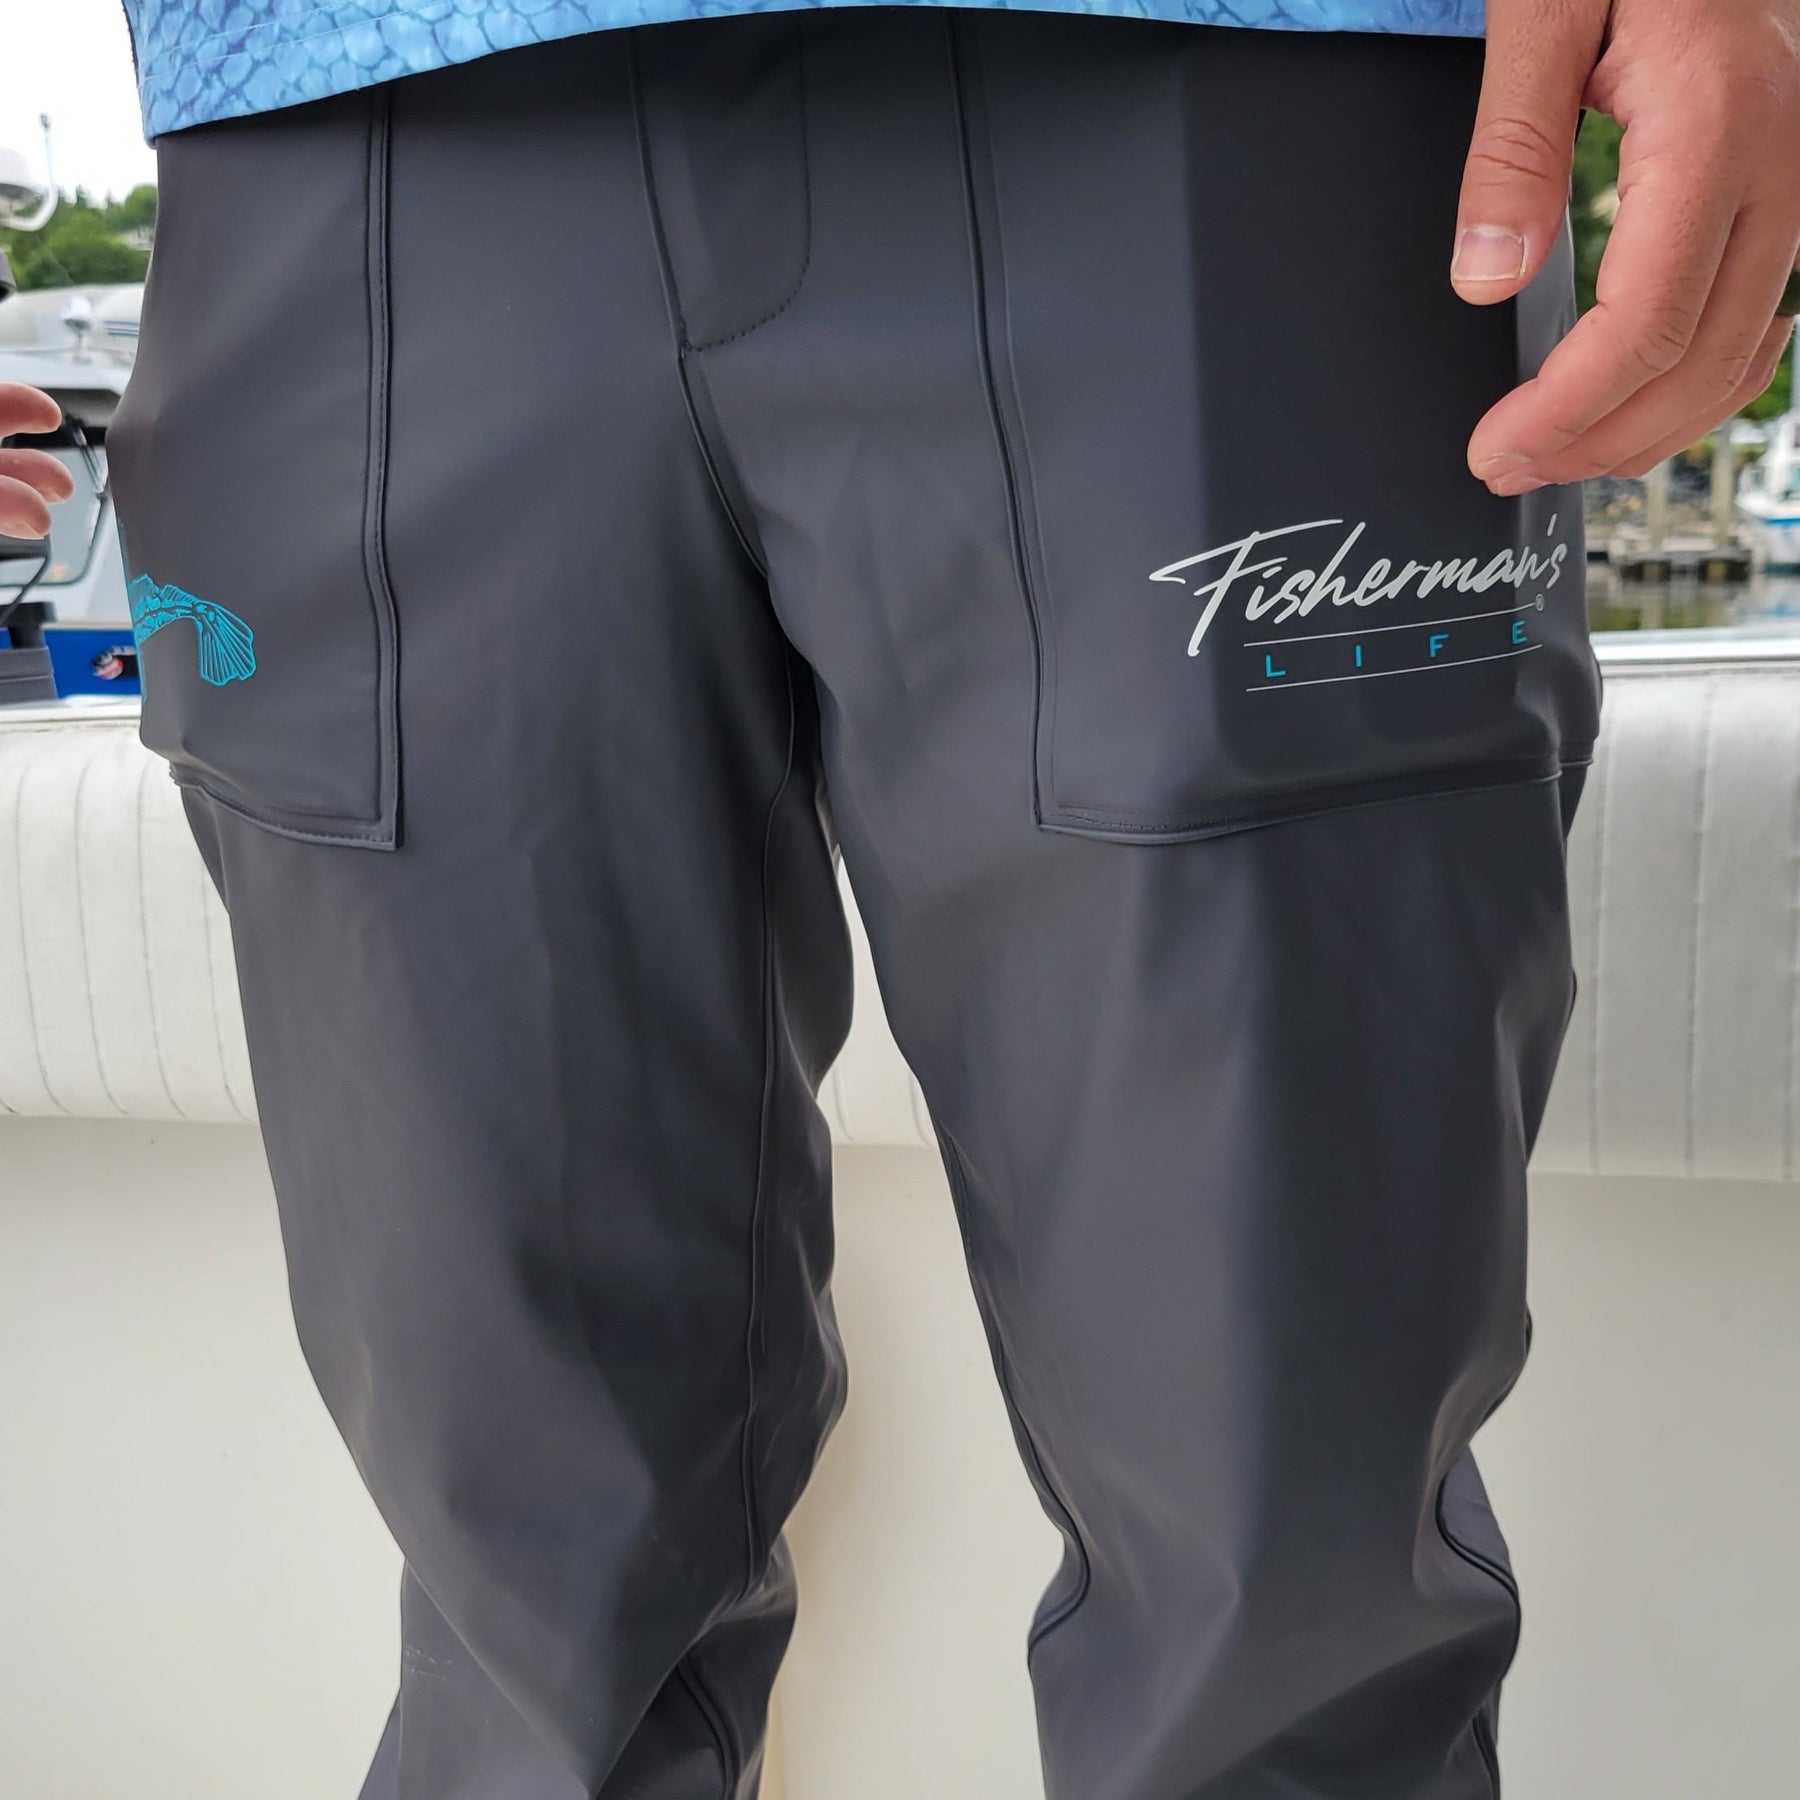 donhobo Men's Waterproof Trousers Softshell Fleece Lined Outdoor Walking  Warm Thicken Hiking Ski Pants with Zip Pockets Grey L : Amazon.co.uk:  Fashion